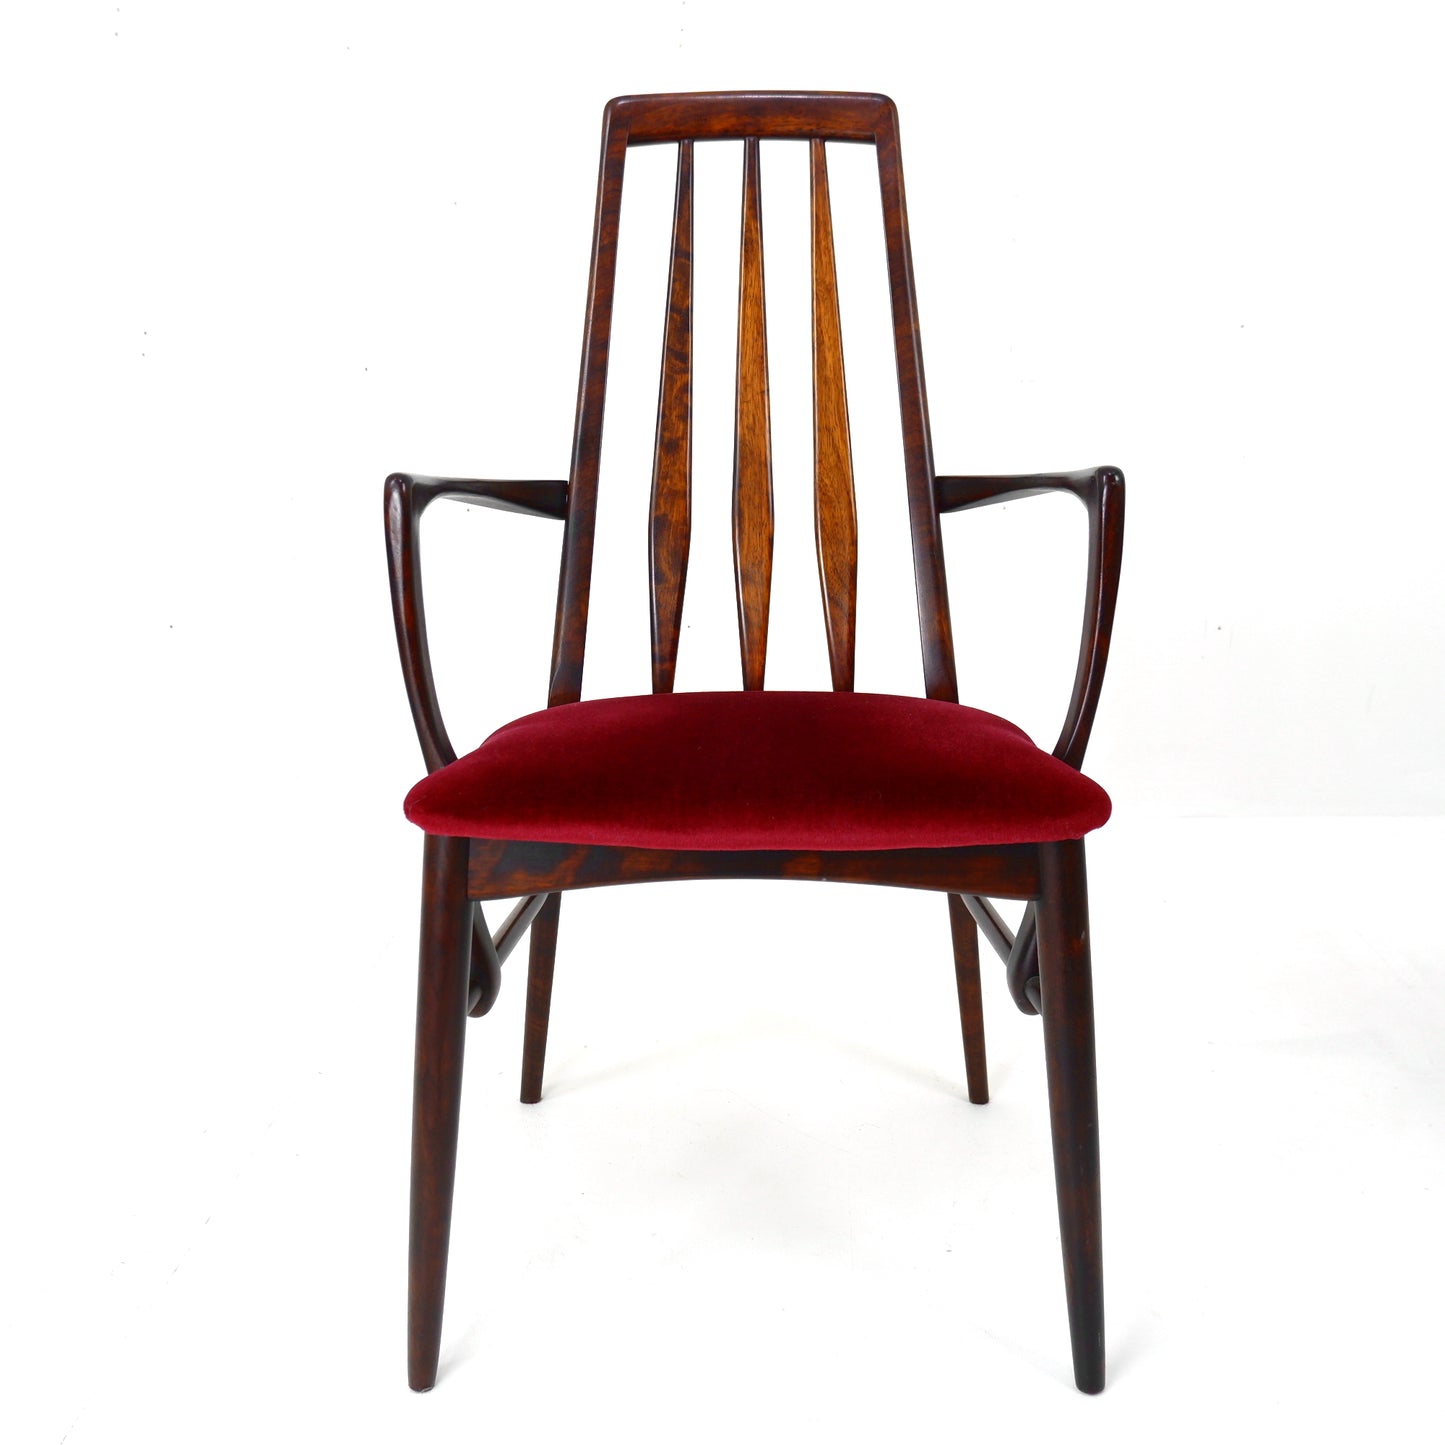 SOLD - for Andrrew: 2 Danish Dining Carver Chairs by Niels Koefoed for Koefoeds Hornslet - Model "Eva"